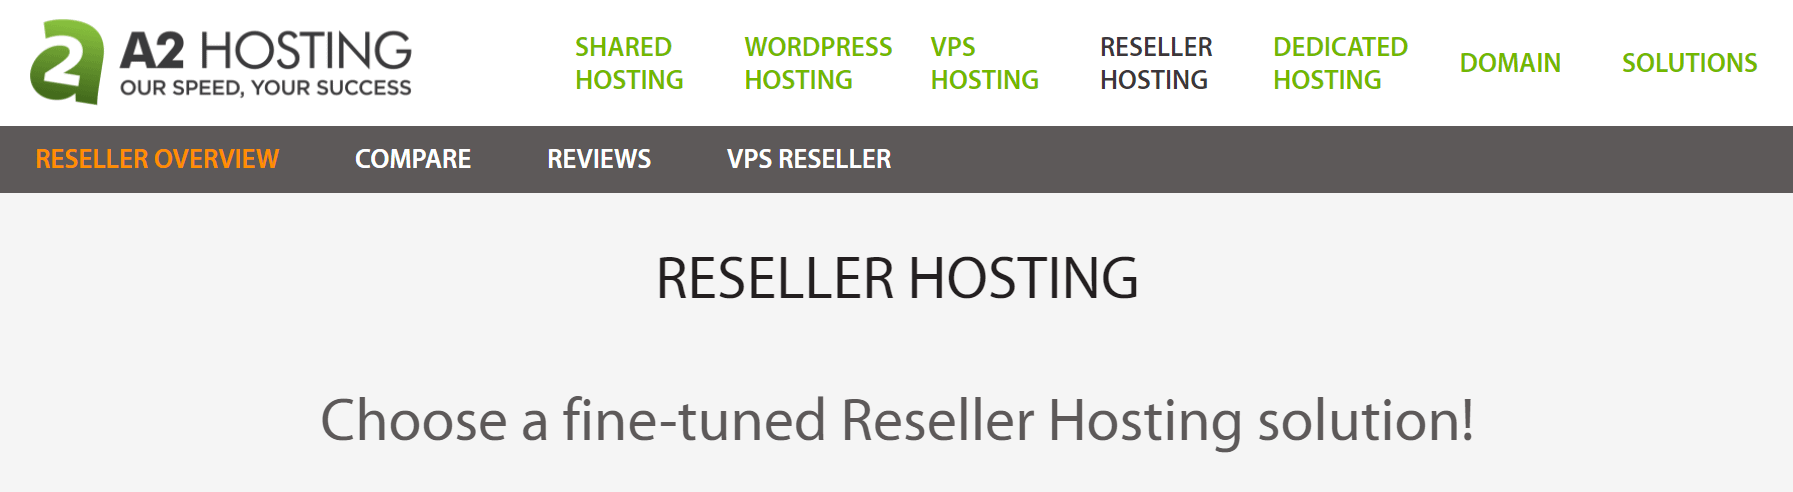 A2 Hosting's reseller hosting page.